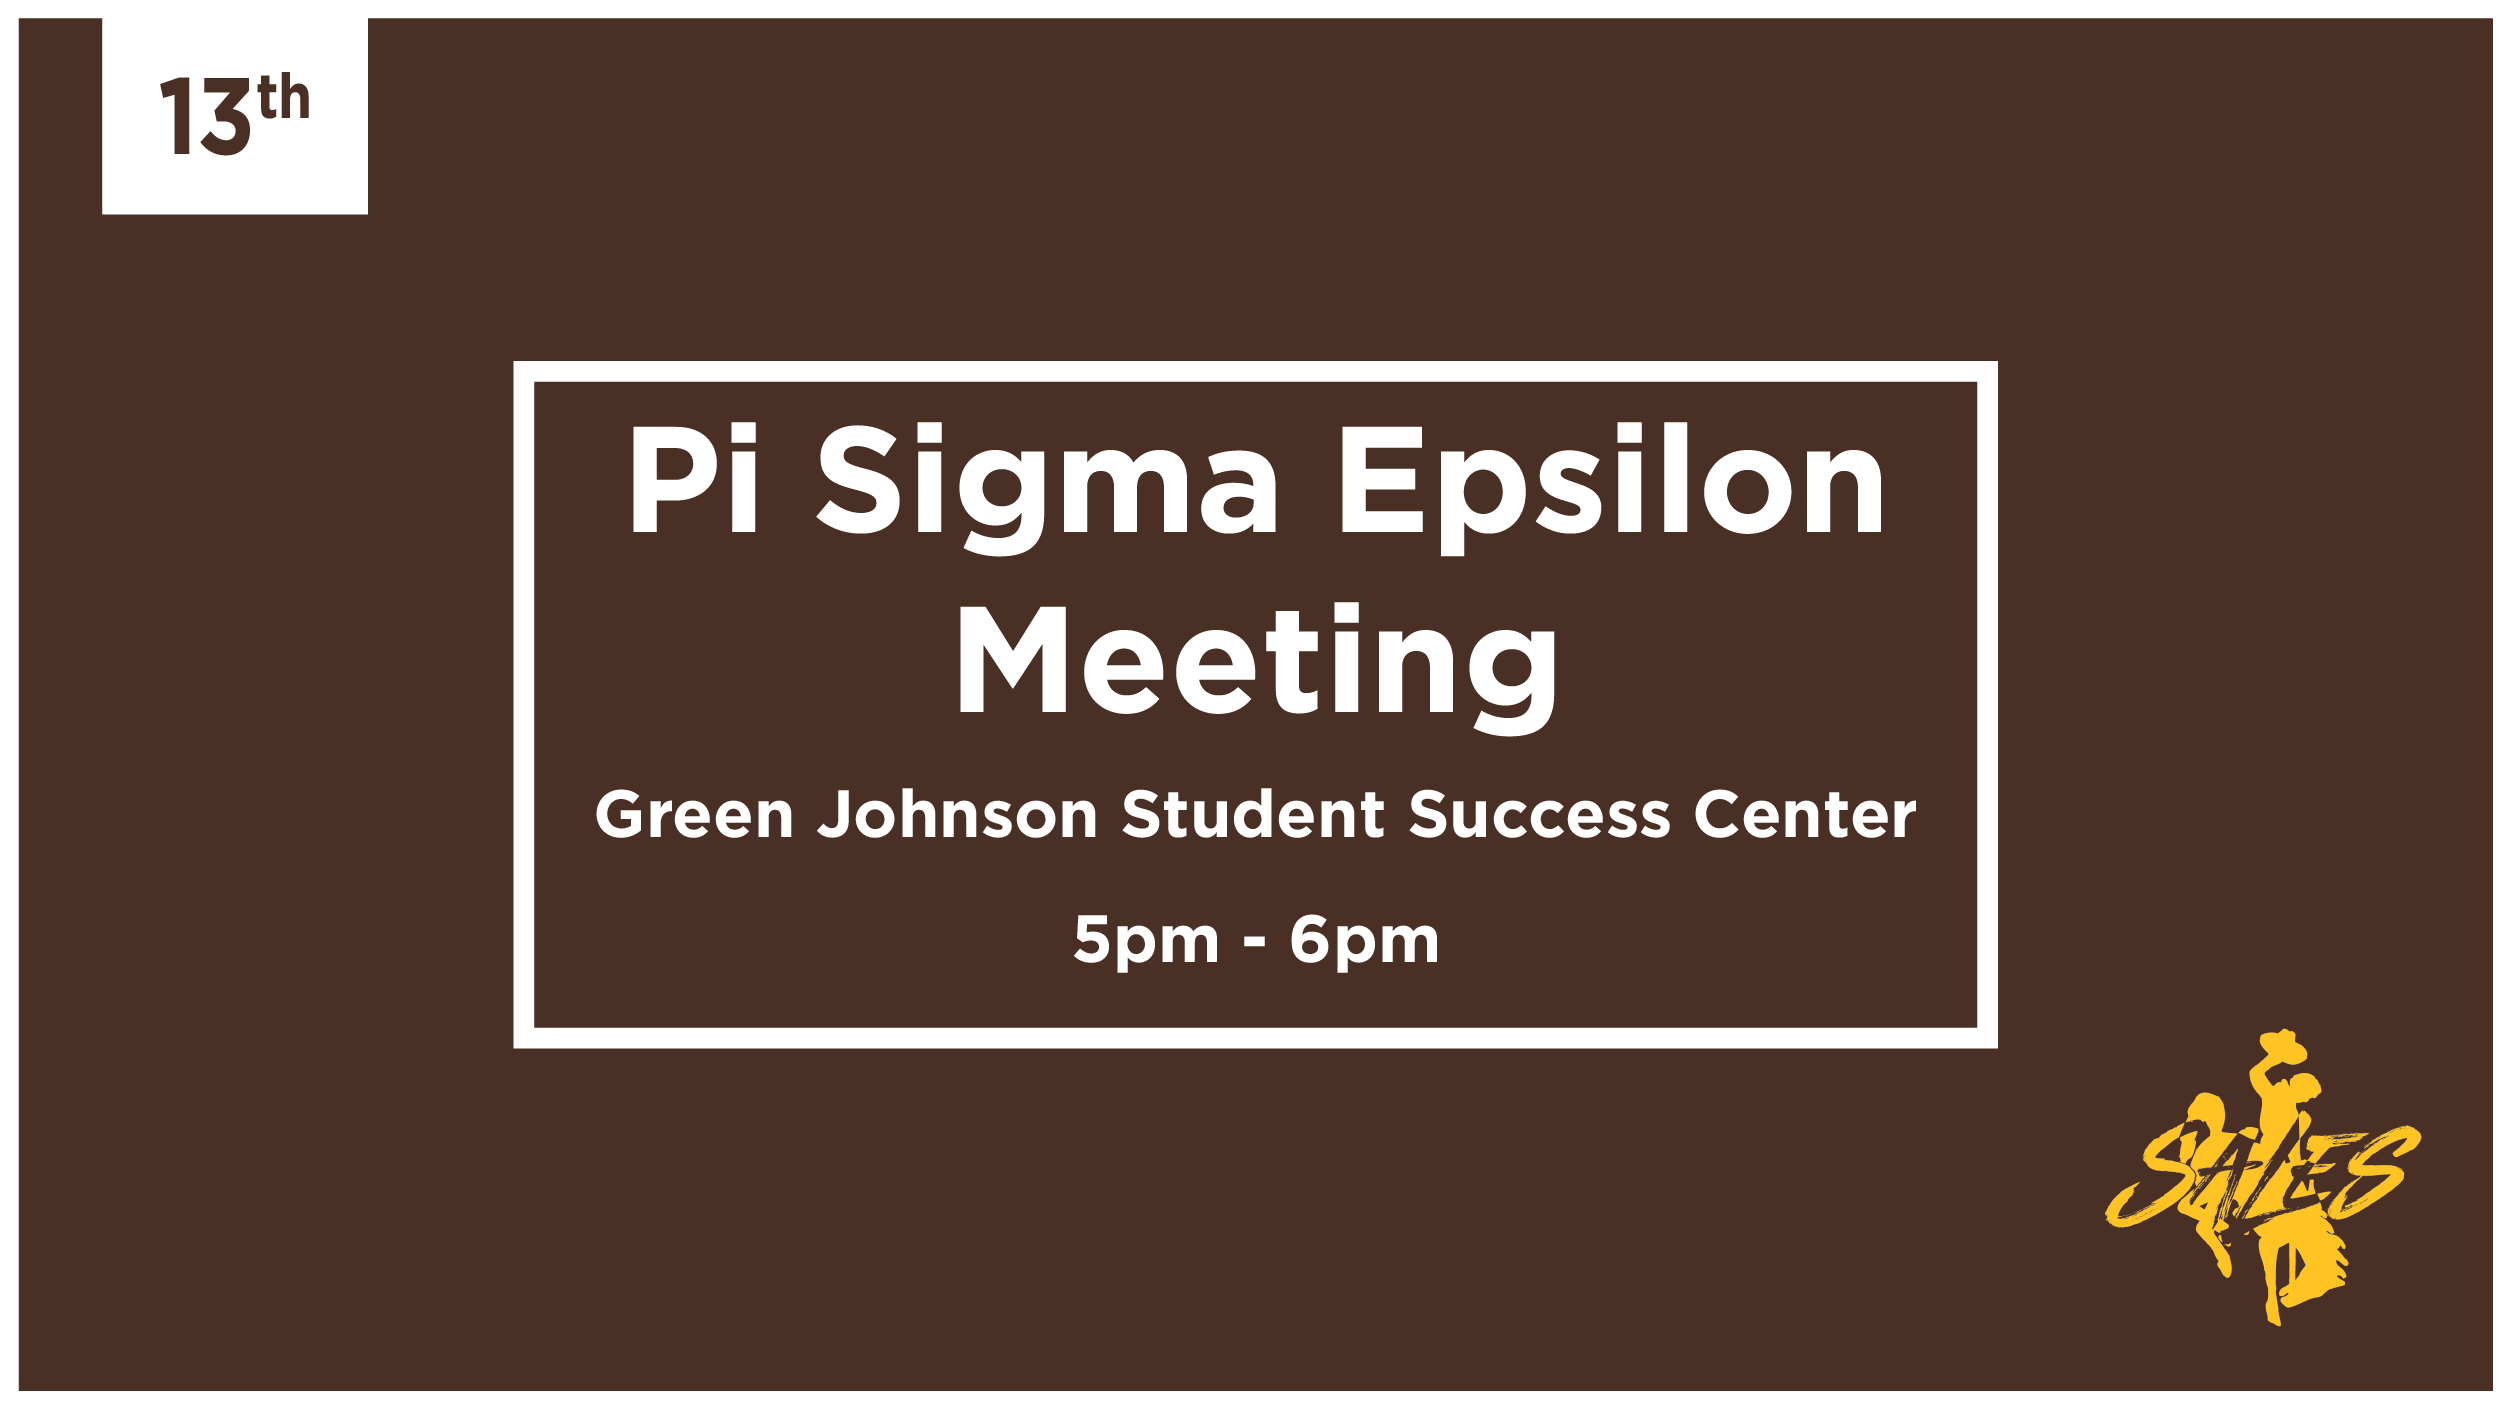 Pi Sigma Epsilon Meeting September 13th